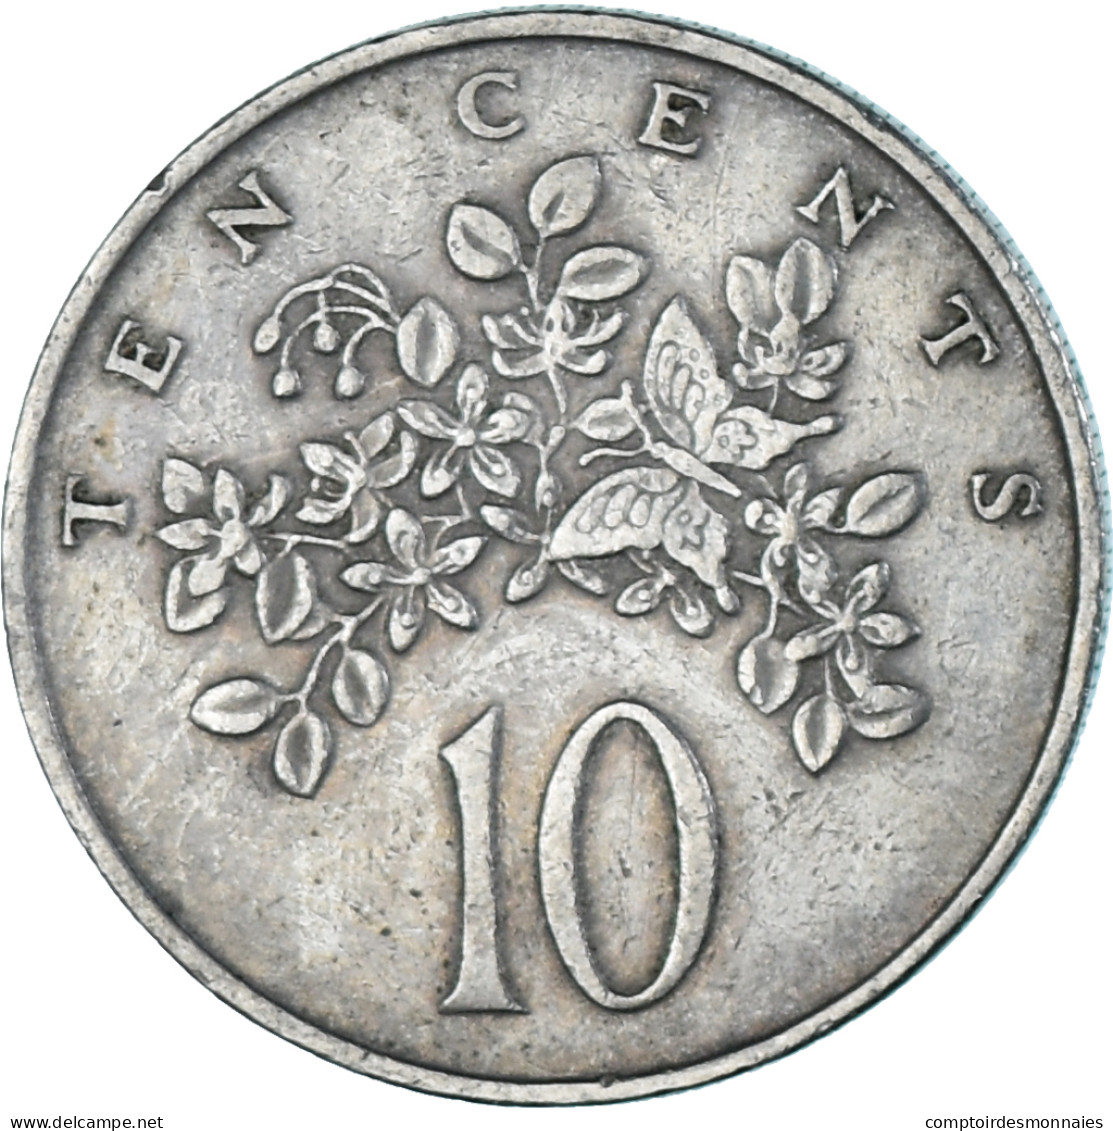 Monnaie, Jamaïque, 10 Cents, 1969 - Jamaica